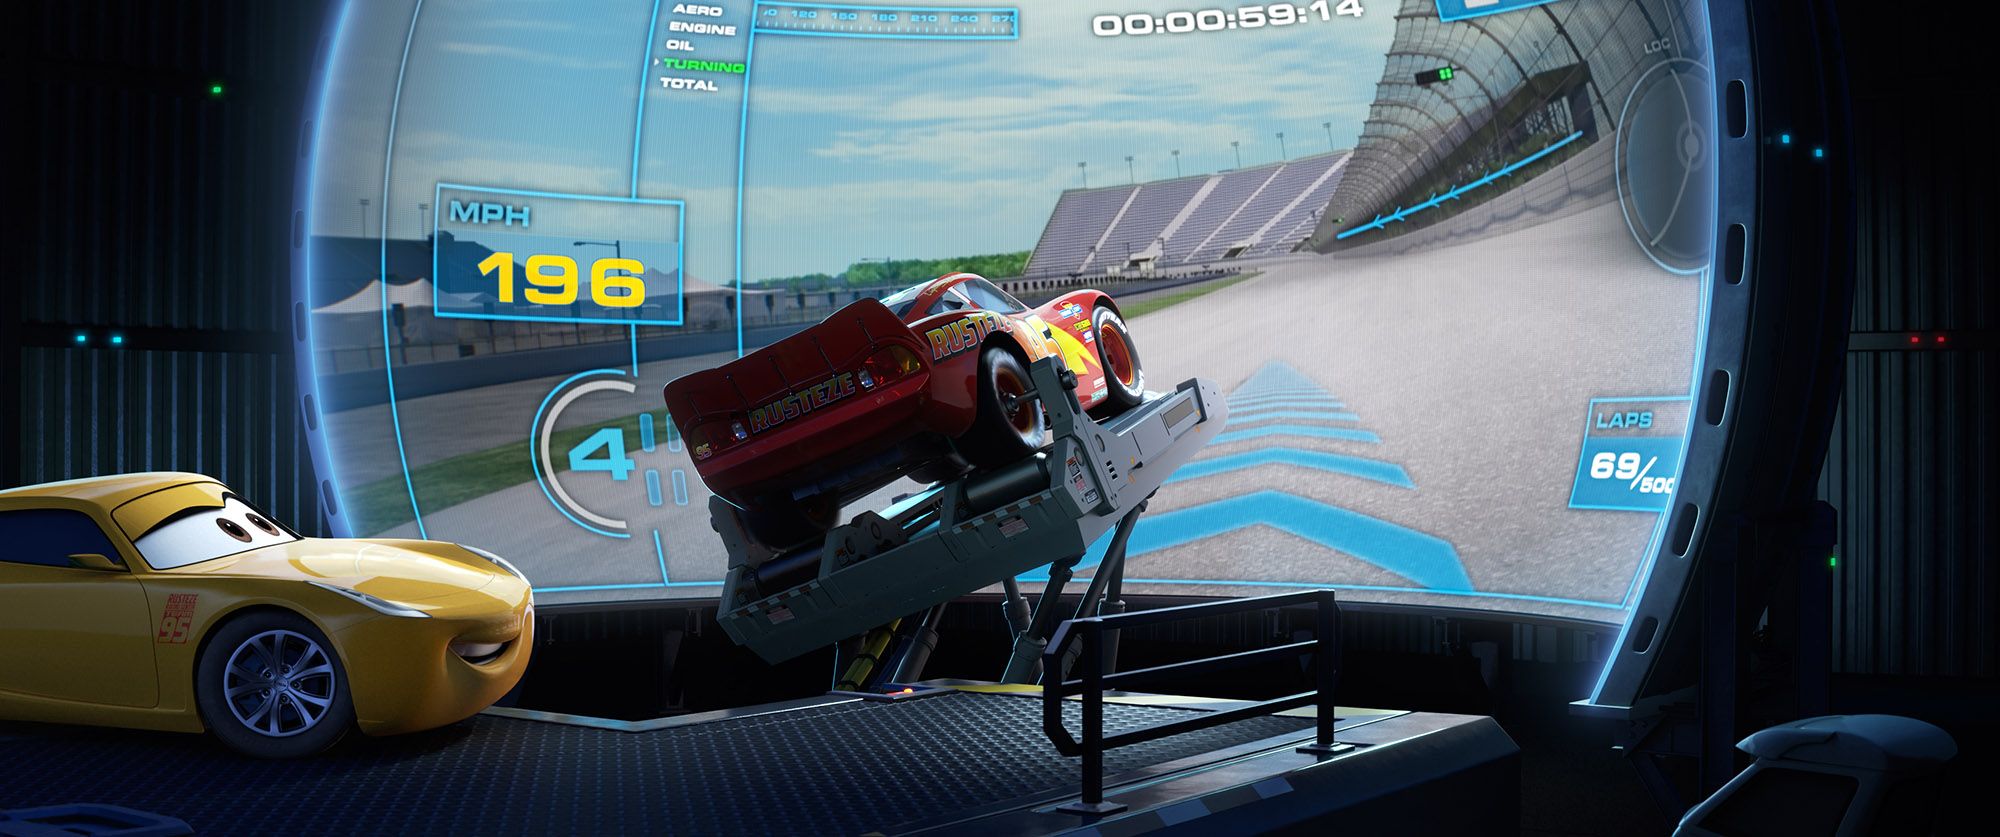 CARS 3 - Lightning McQueen in Cruz Ramirez's Training Simulator